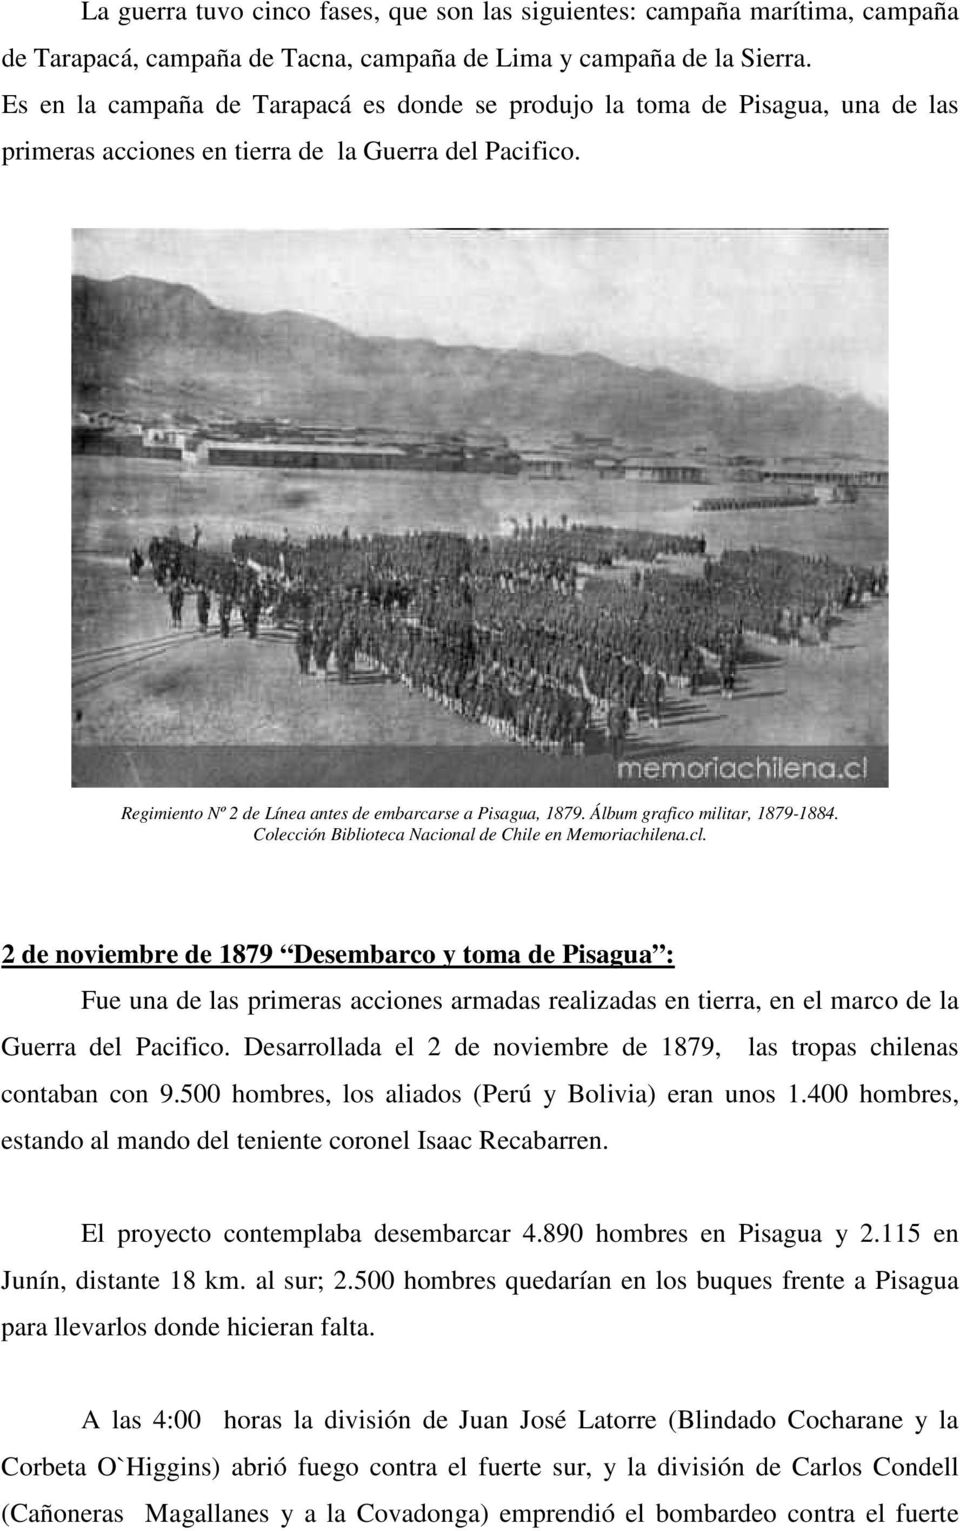 Álbum grafico militar, 1879-1884. Colección Biblioteca Nacional de Chile en Memoriachilena.cl.